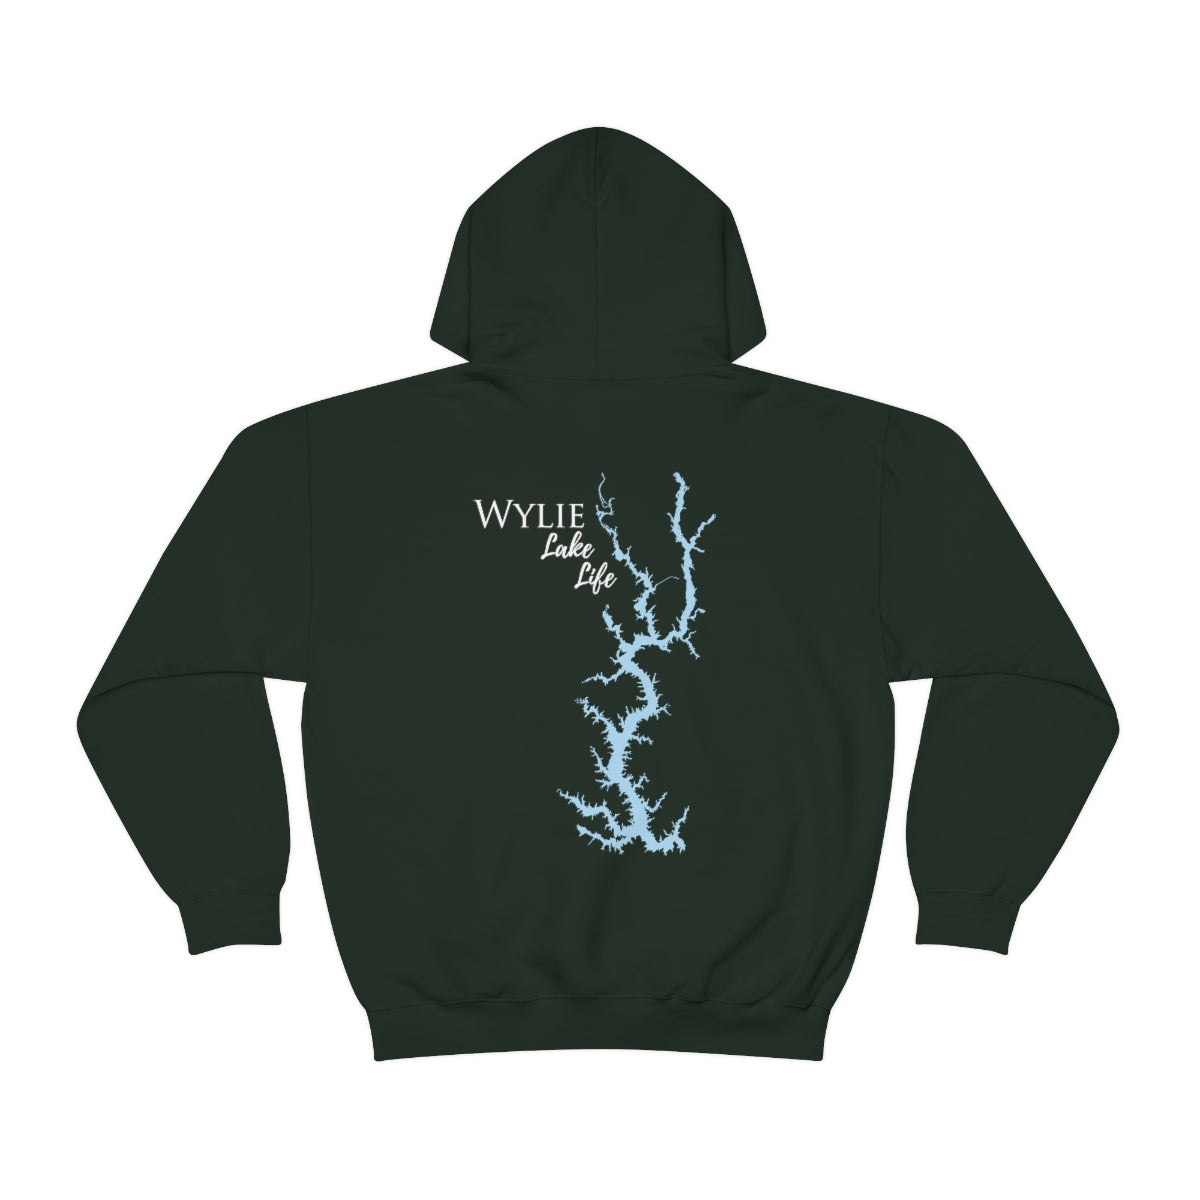 Wylie Lake Life Hoodie - BACK PRINTED - Sweatshirt - nc and sc - North Carolina Lake